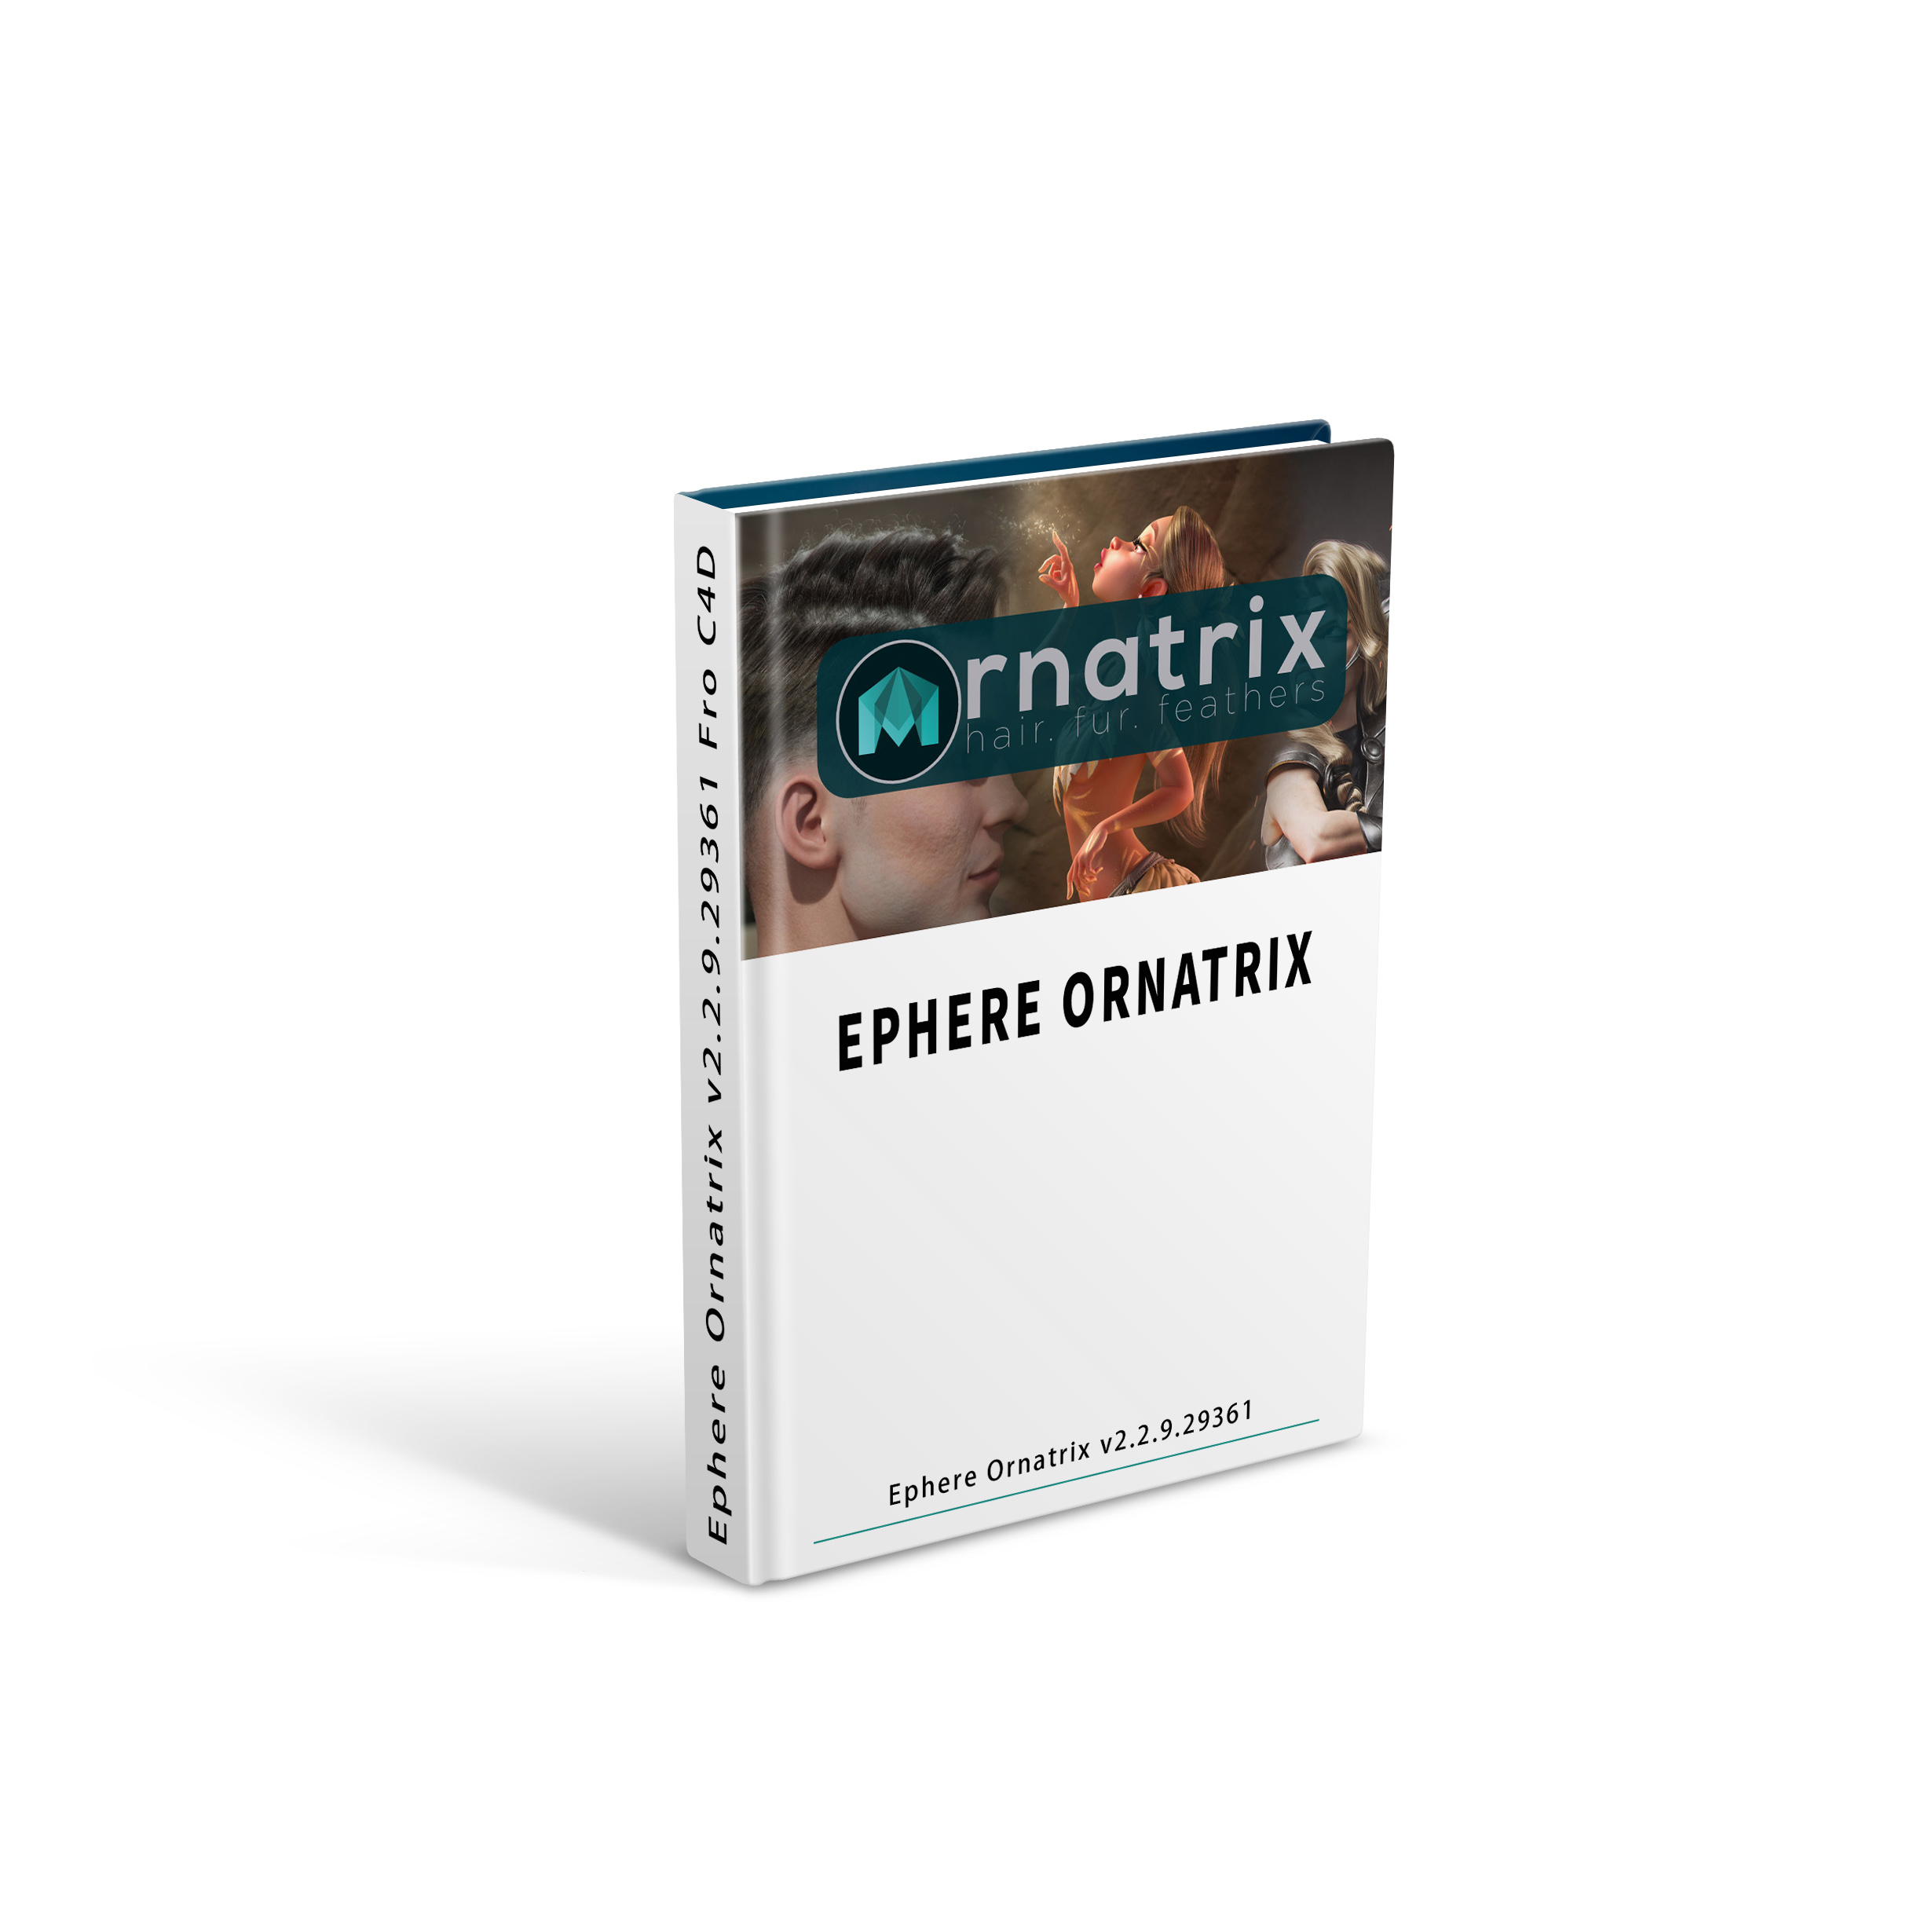 Ephere Ornatrix v2.3.0.29616 Fro Cinema 4D R19-R25羽毛和毛发插件中文破解版